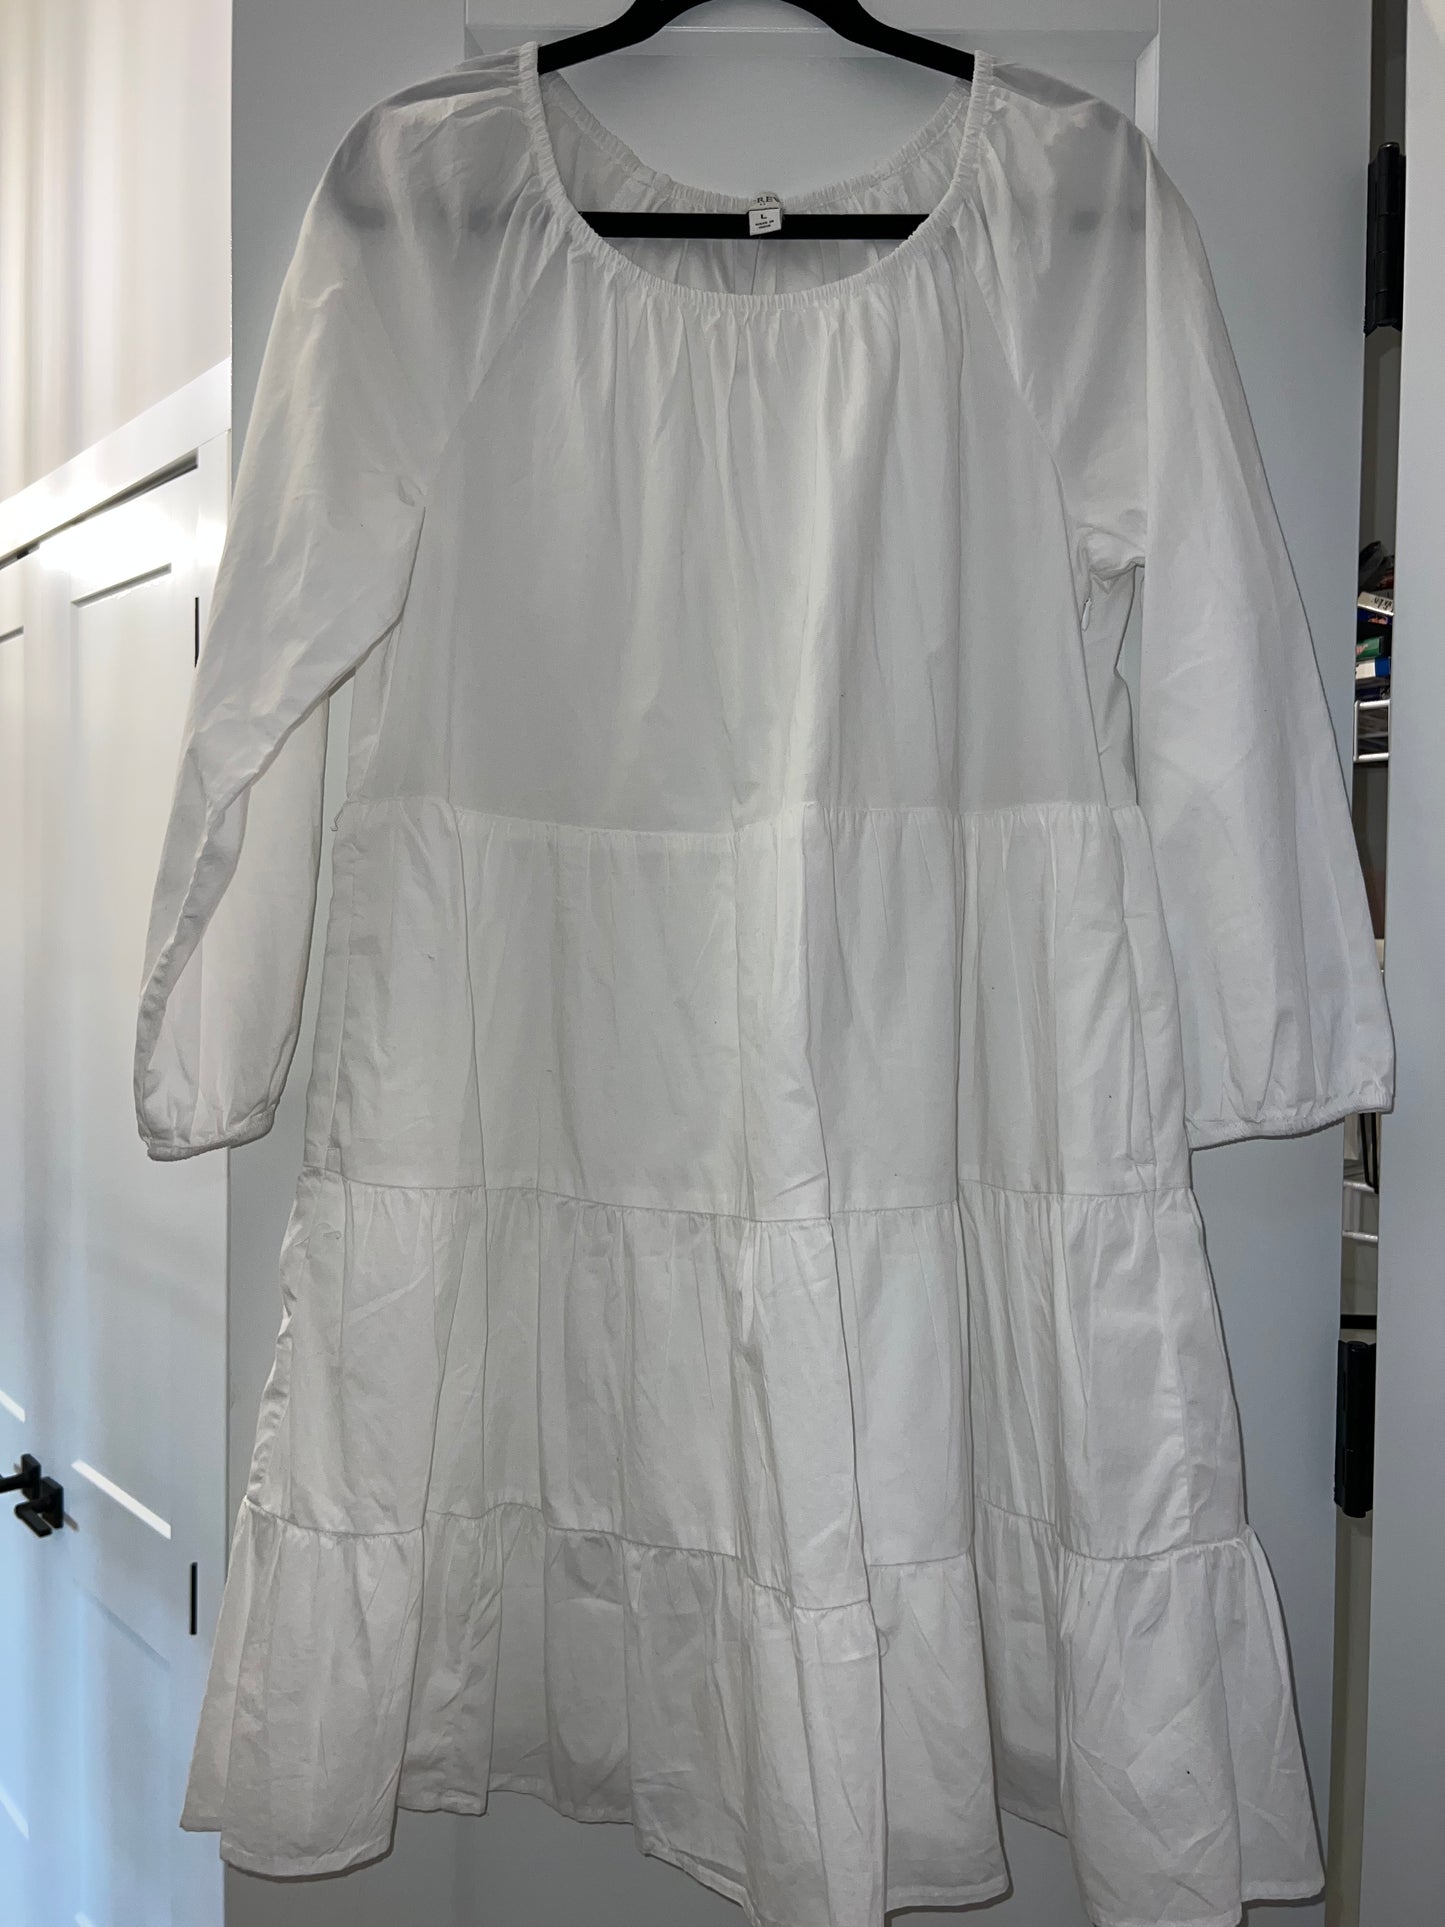 Womens Large Jcrew white dress, nwt